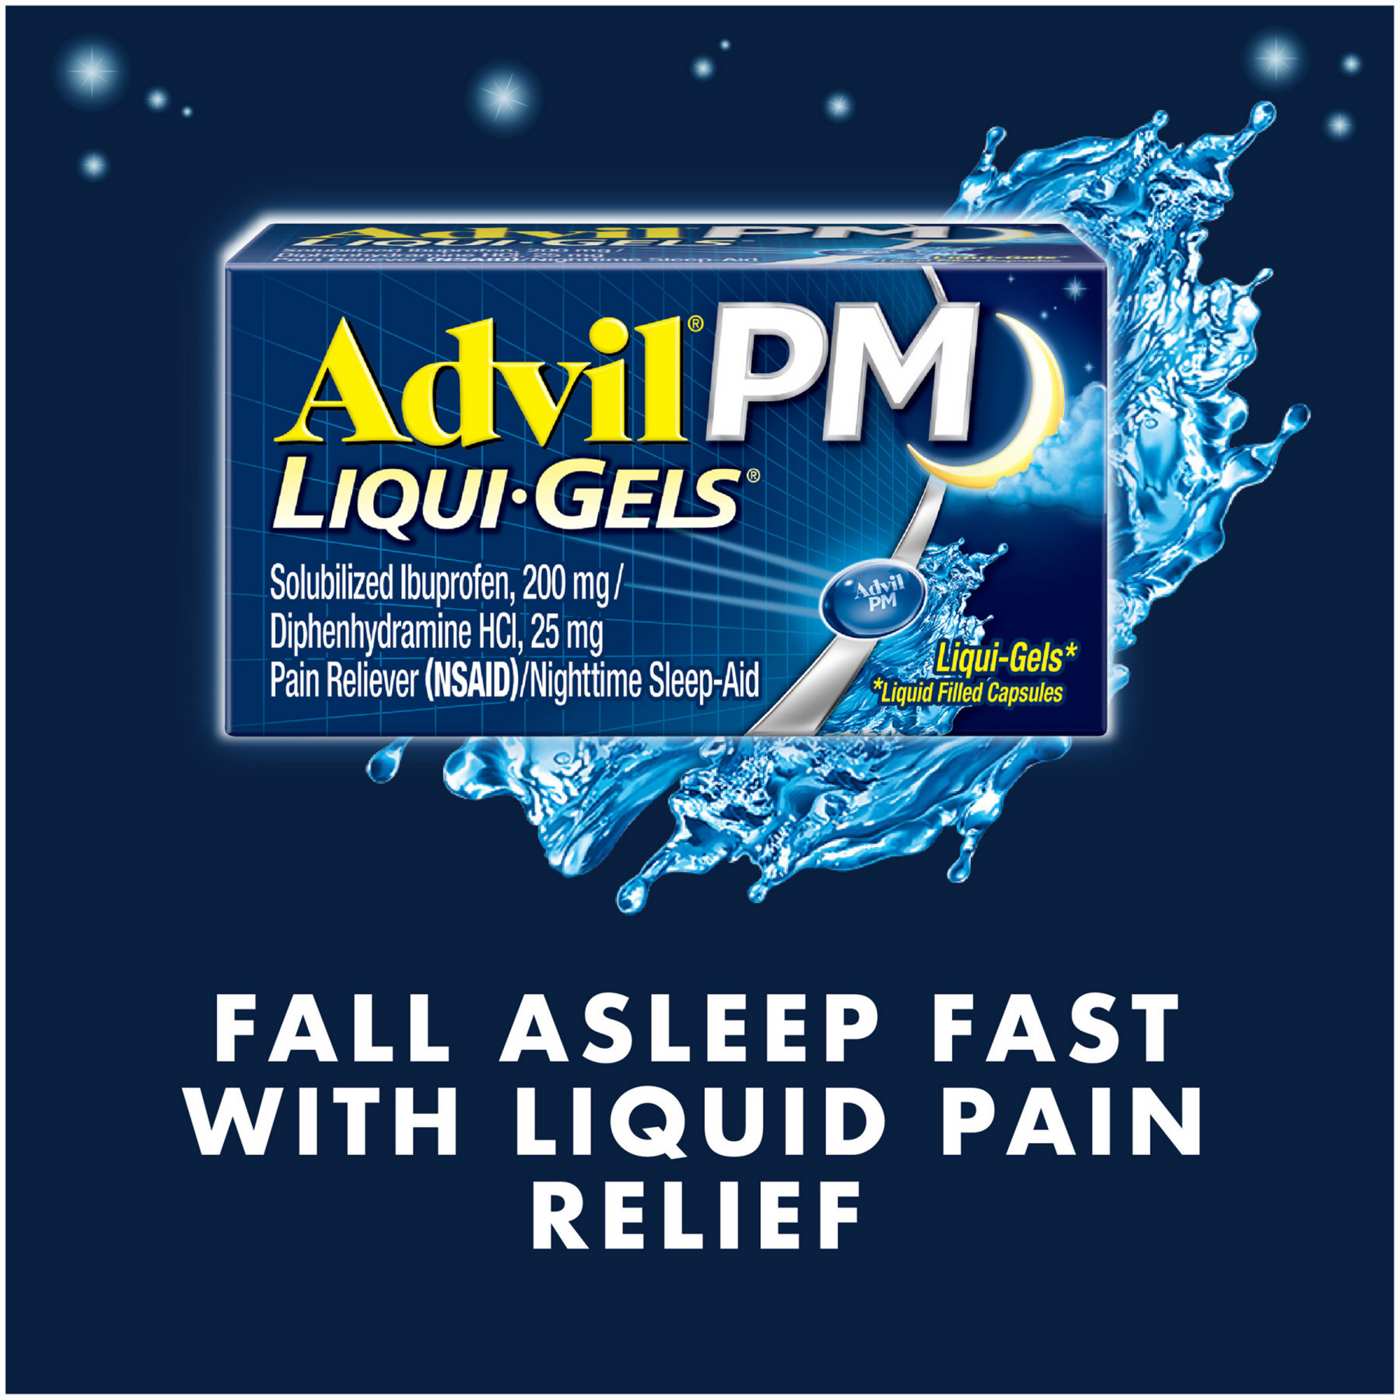 Advil PM Liqui-Gels Pain Reliever & Nighttime Sleep Aid Liquid Filled Capsules; image 8 of 8